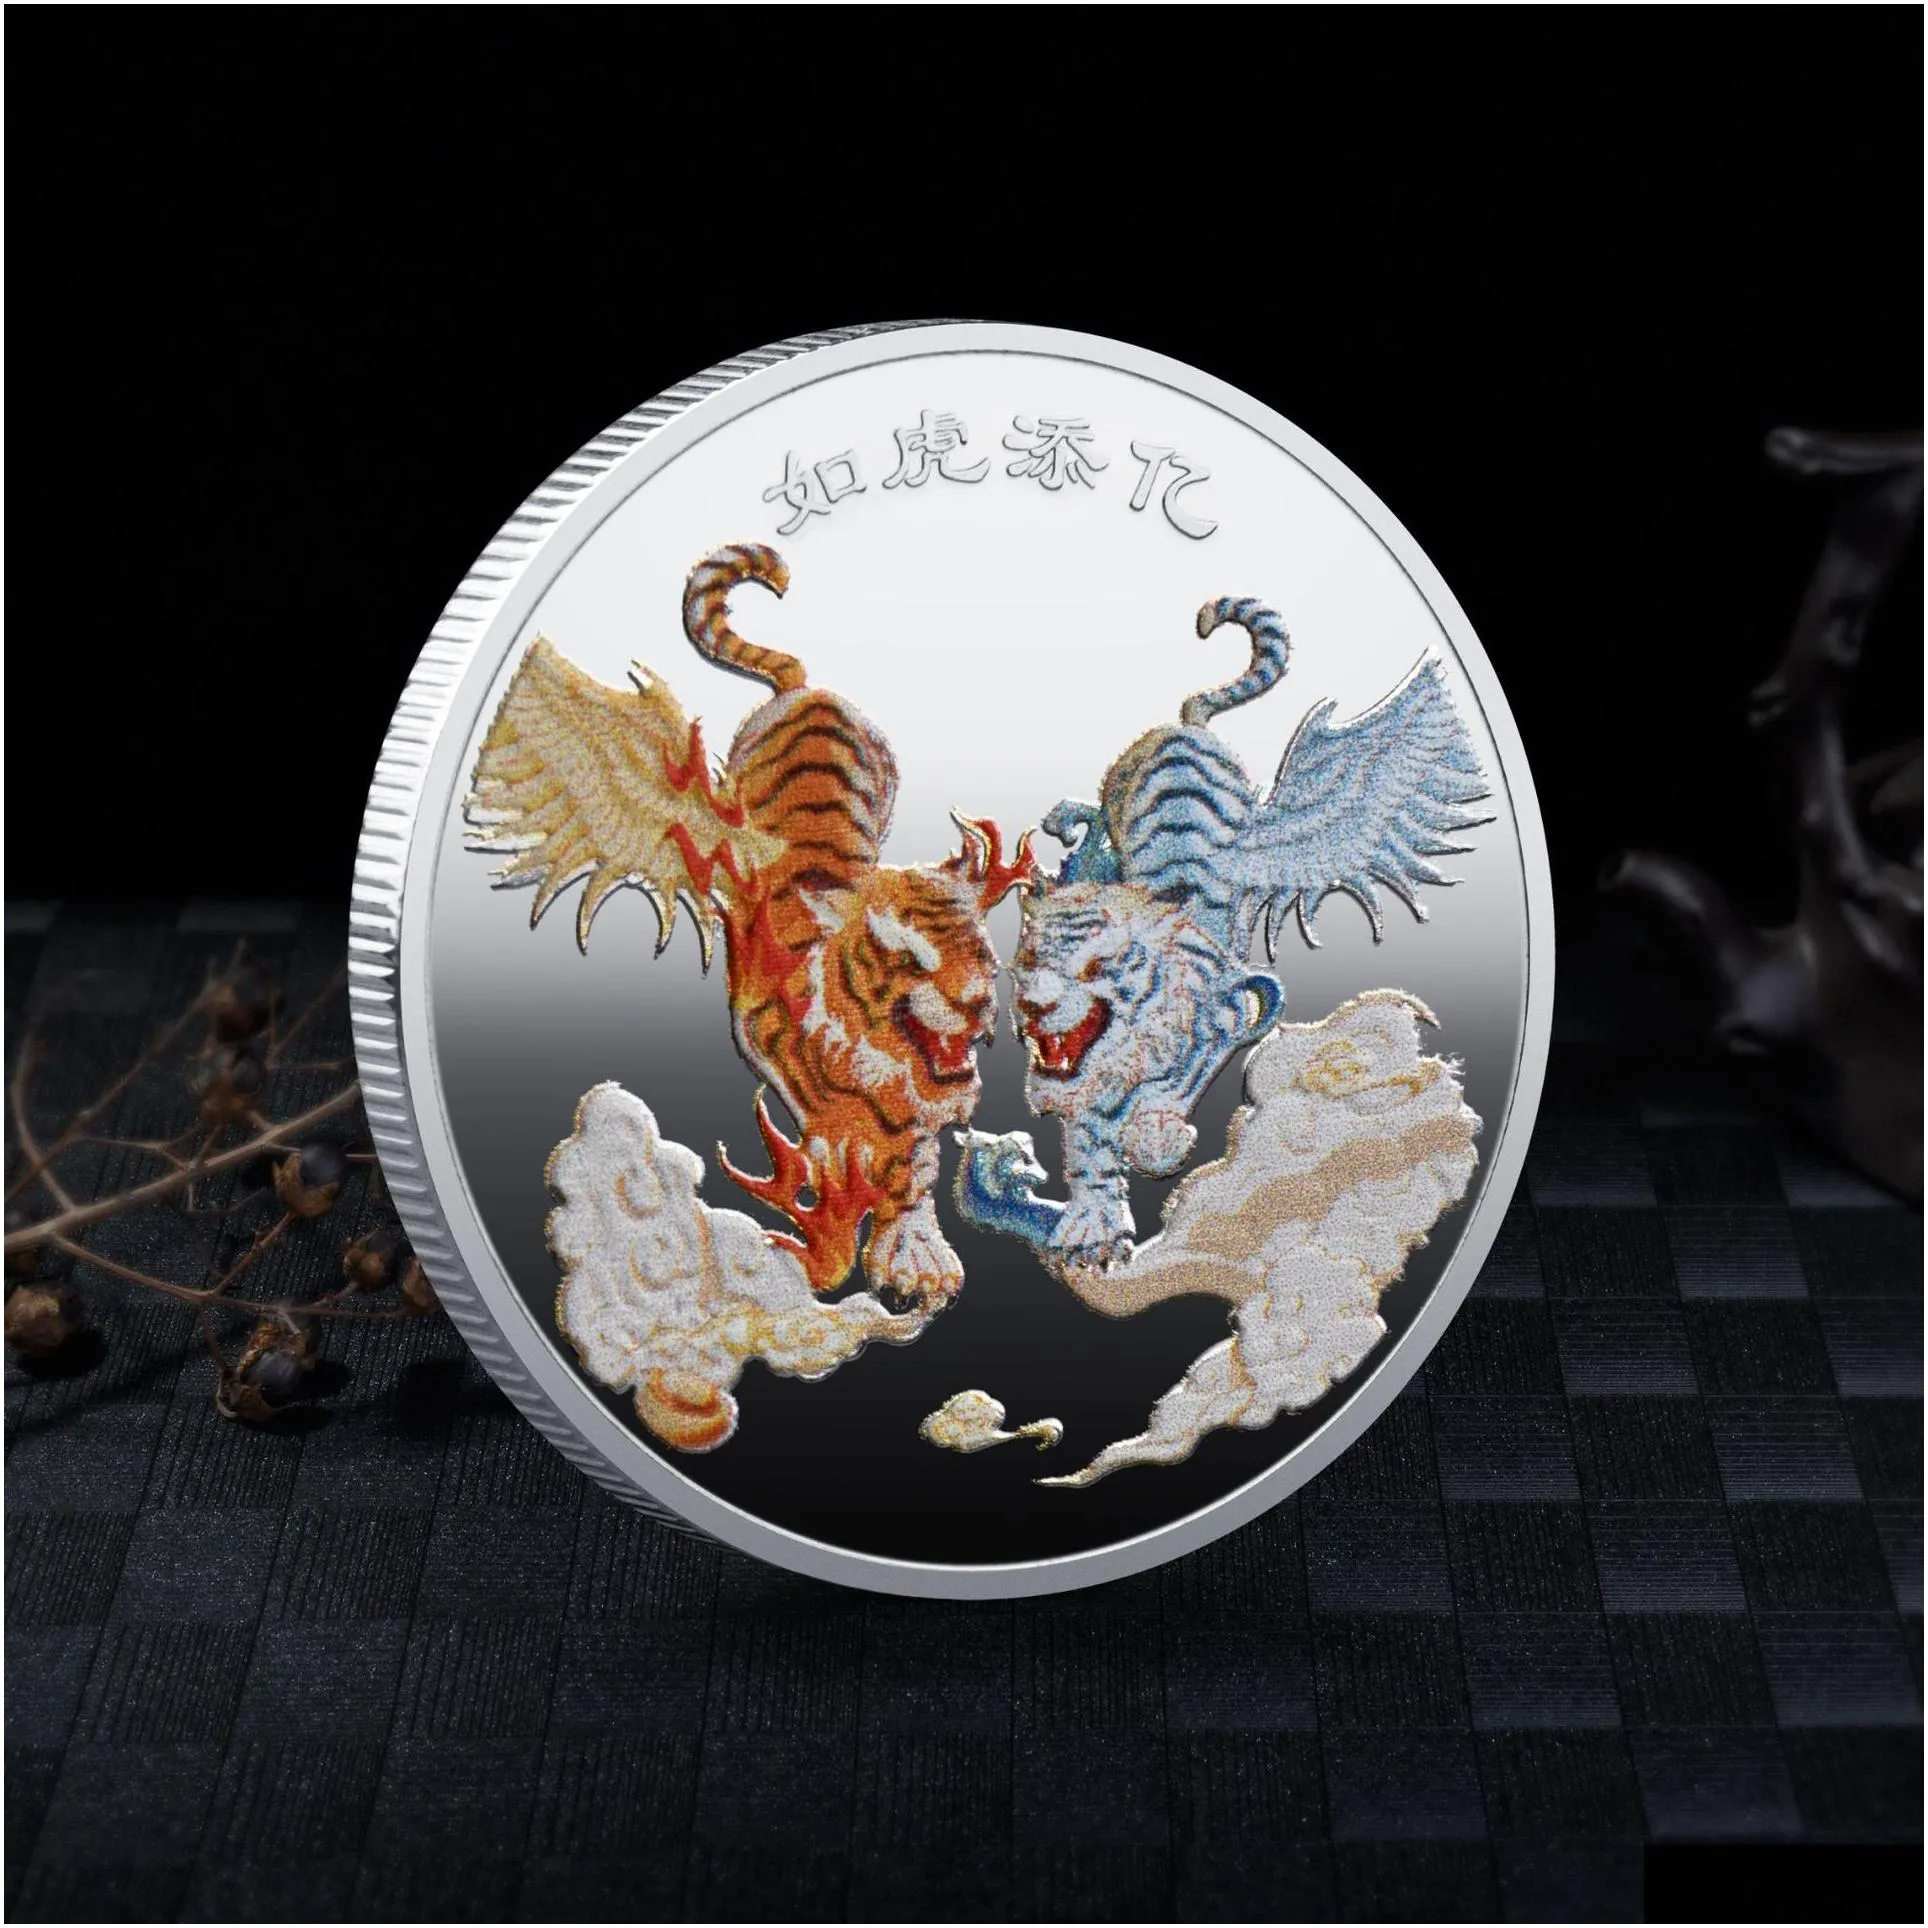 2023 two tiger lucky coin collectible coin for luck tiger commemorative souvenir for feng shui decoration